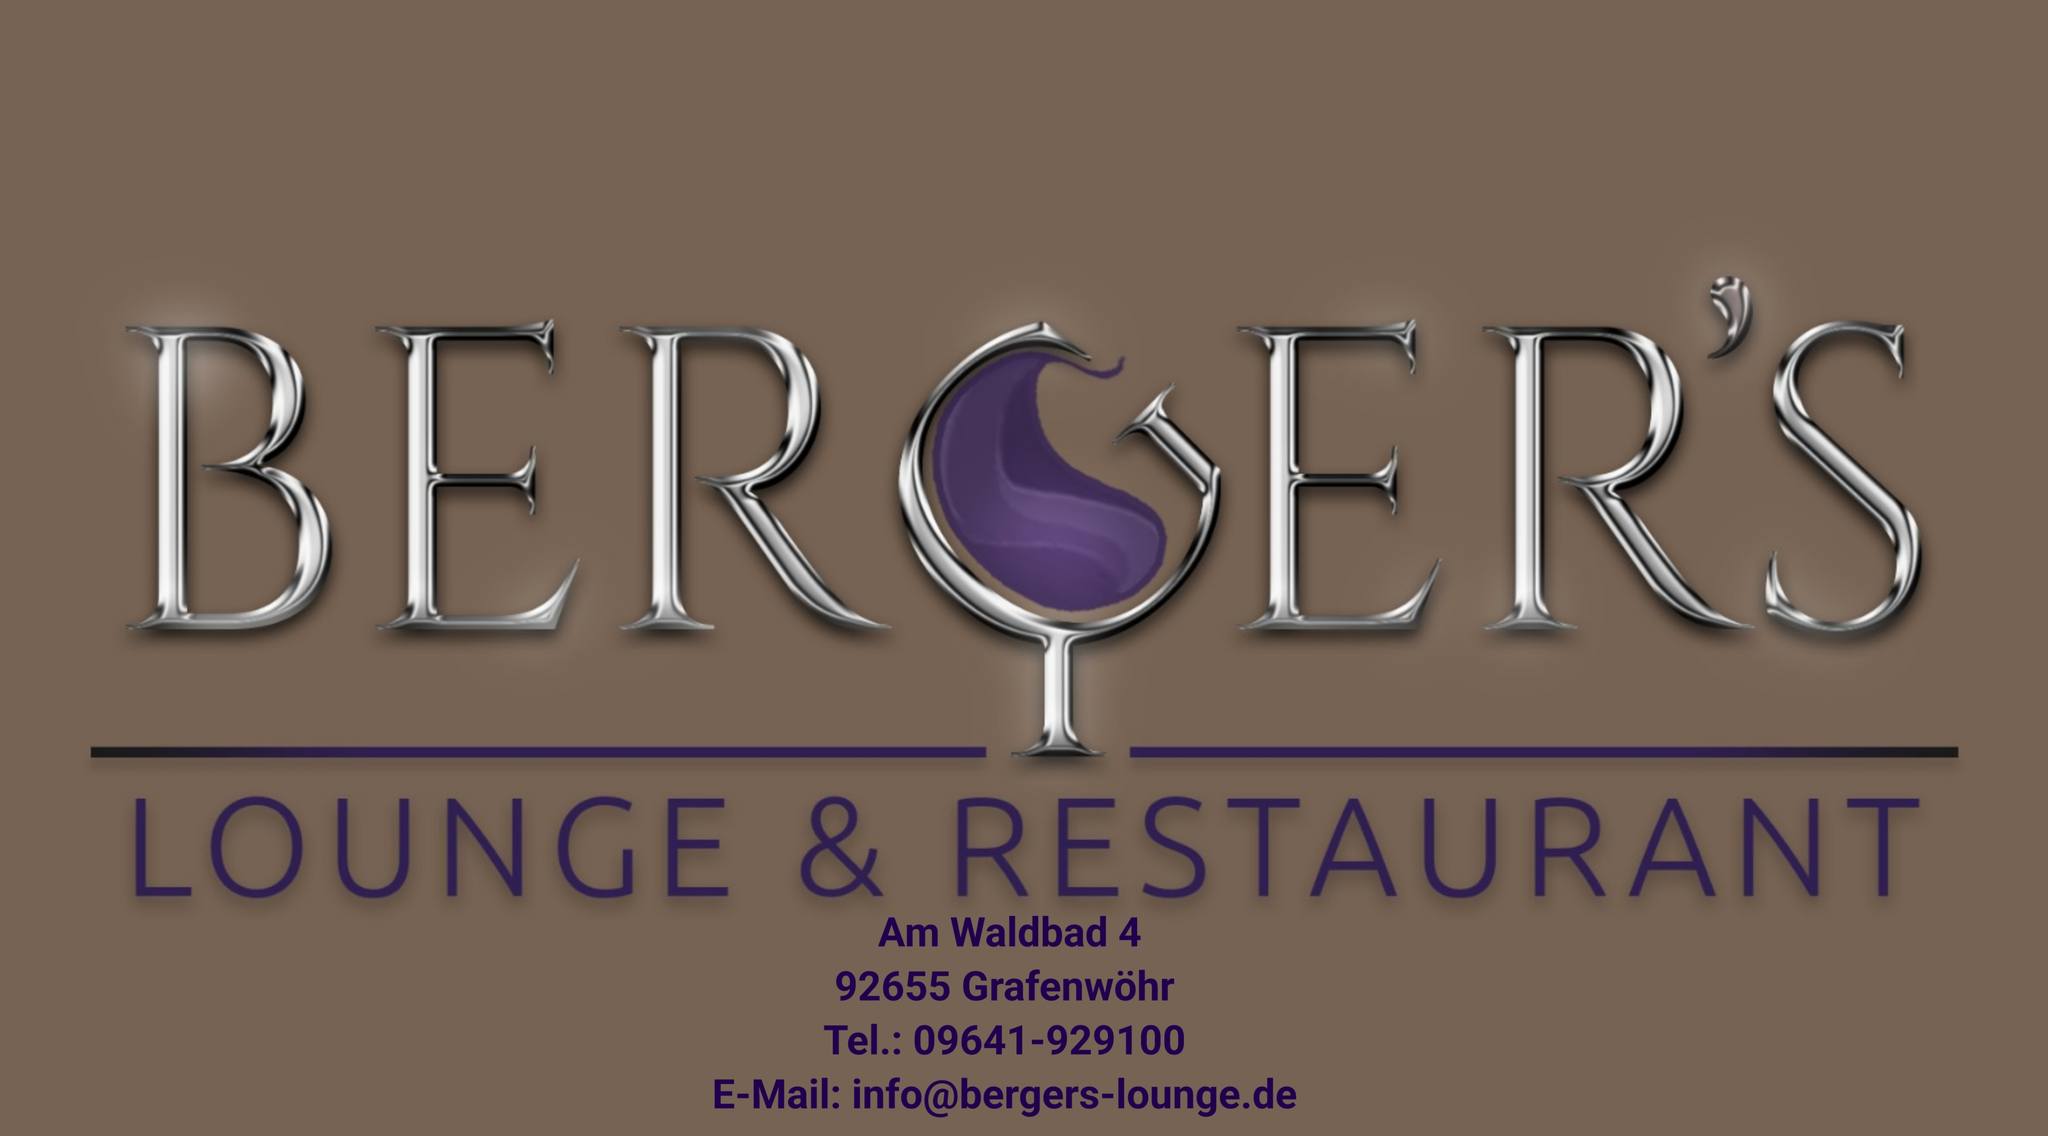 Berger's Lounge & Restaurant